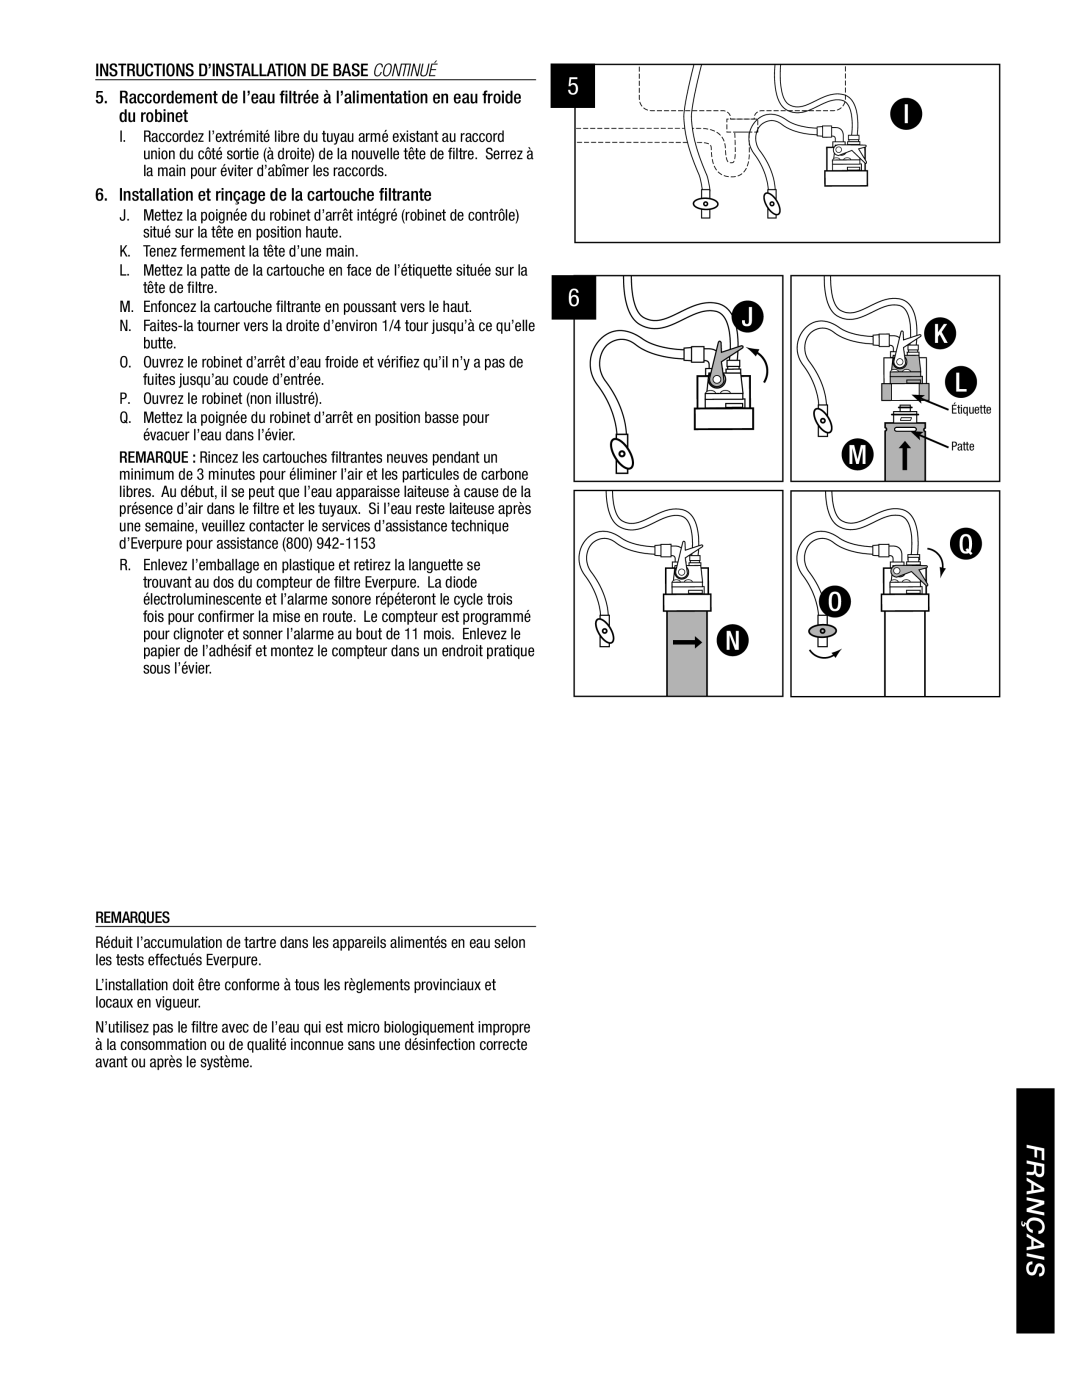 Everpure PBS400 installation instructions Installation et rinçage de la cartouche filtrante, Remarques 